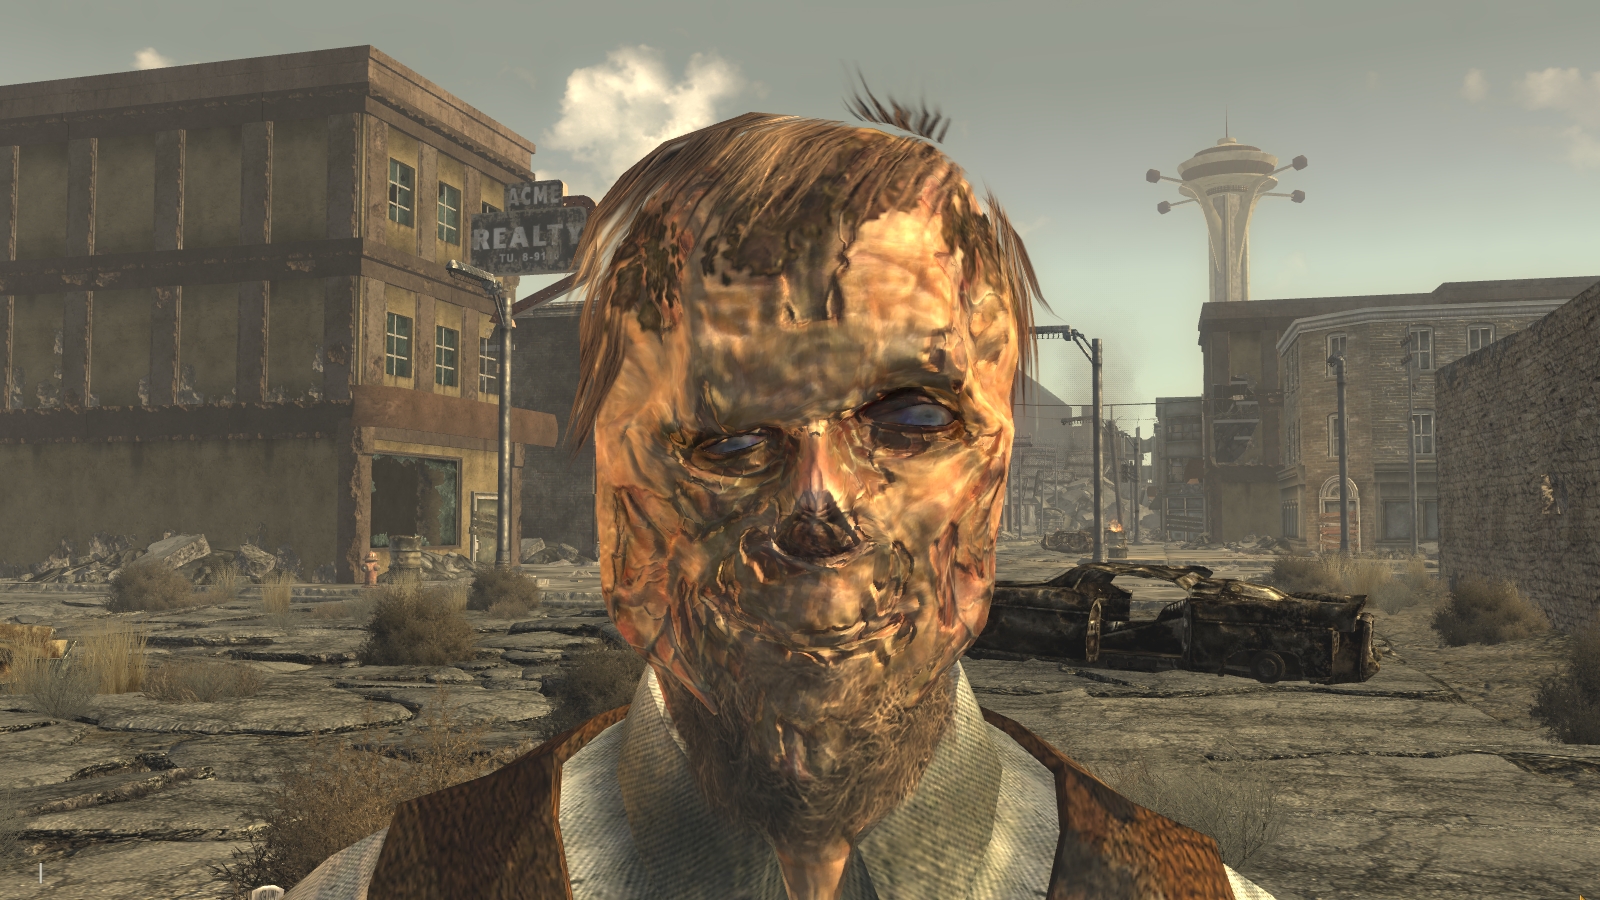 Fallout какой год в игре. Фоллаут Нью Вегас. Фоллаут новый Вегас. Fallout 3 New Vegas.